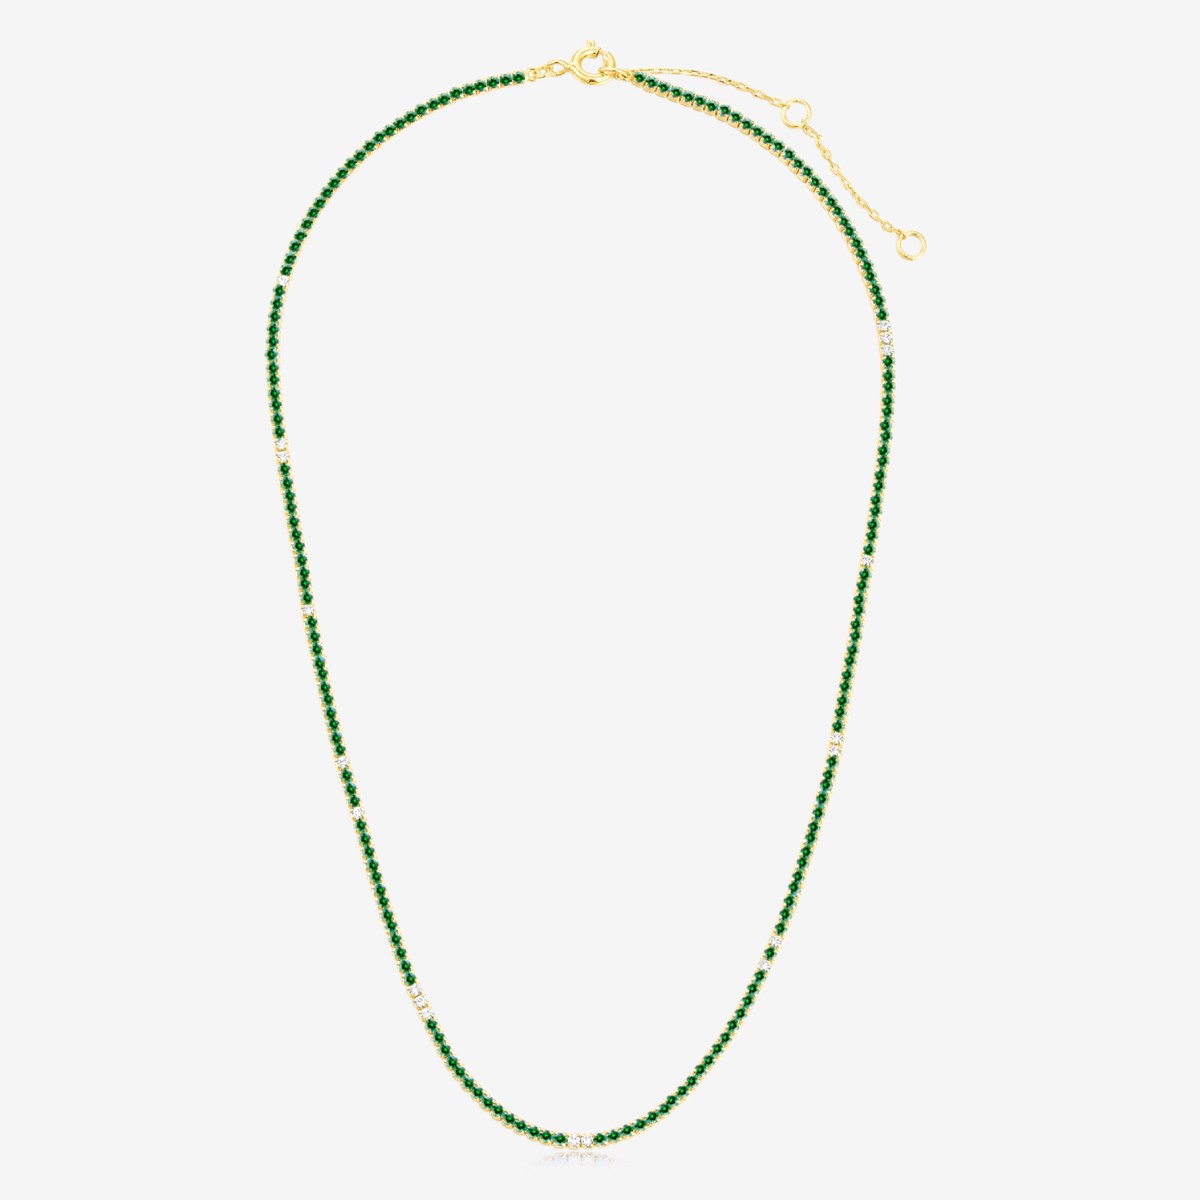 Green Goddess Necklace - Ketten - 18k vergoldet